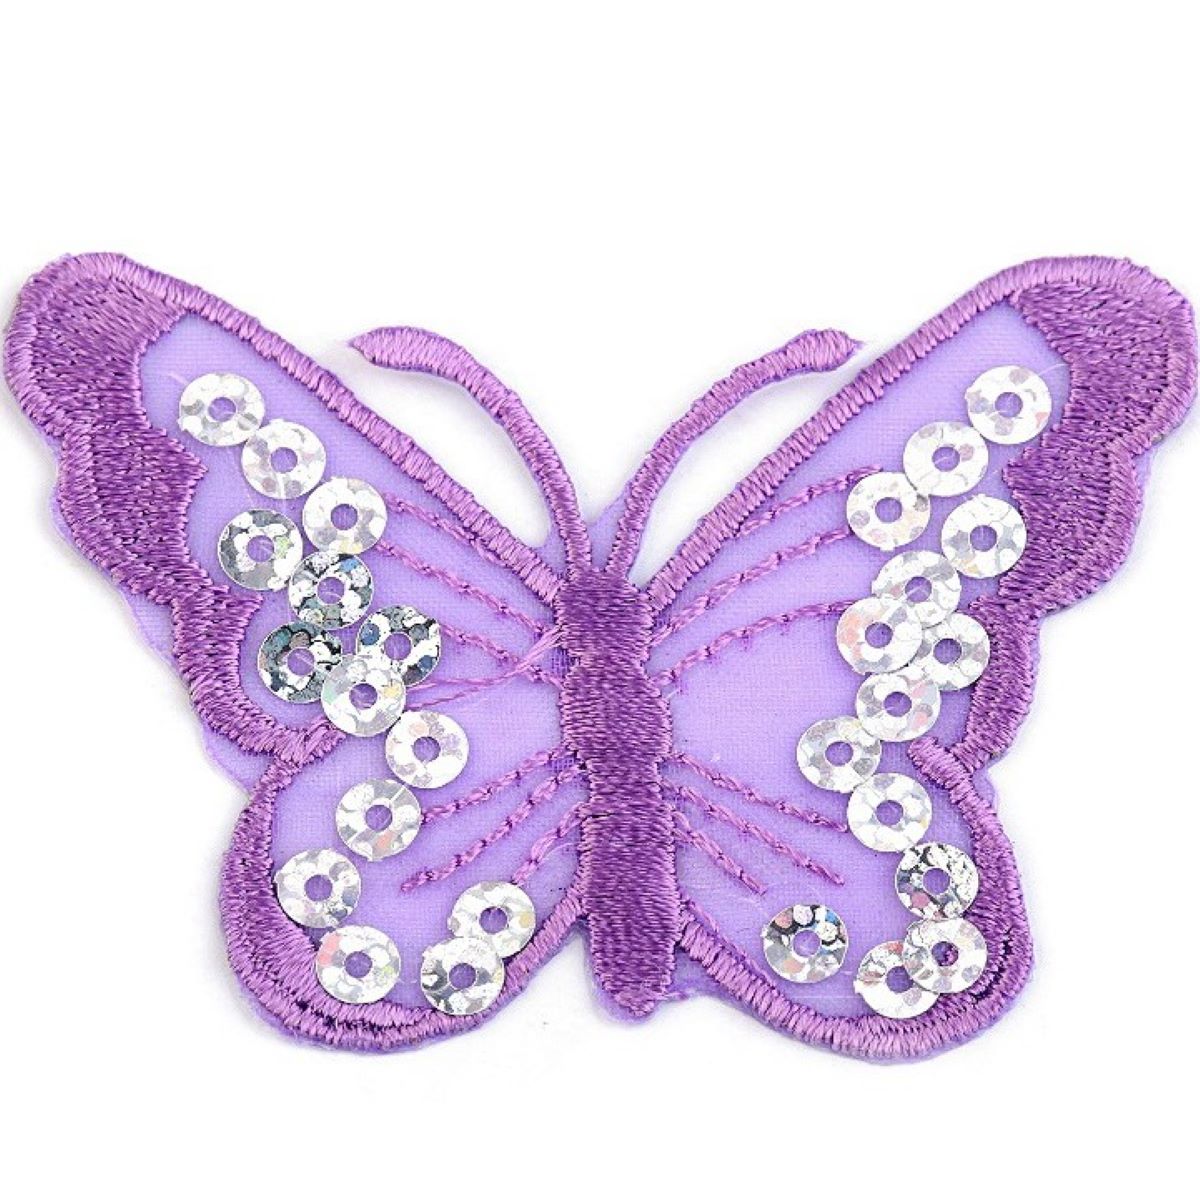 Nažehlovačka ~ 46x67 mm ~ motýl s flitry ~ fialový